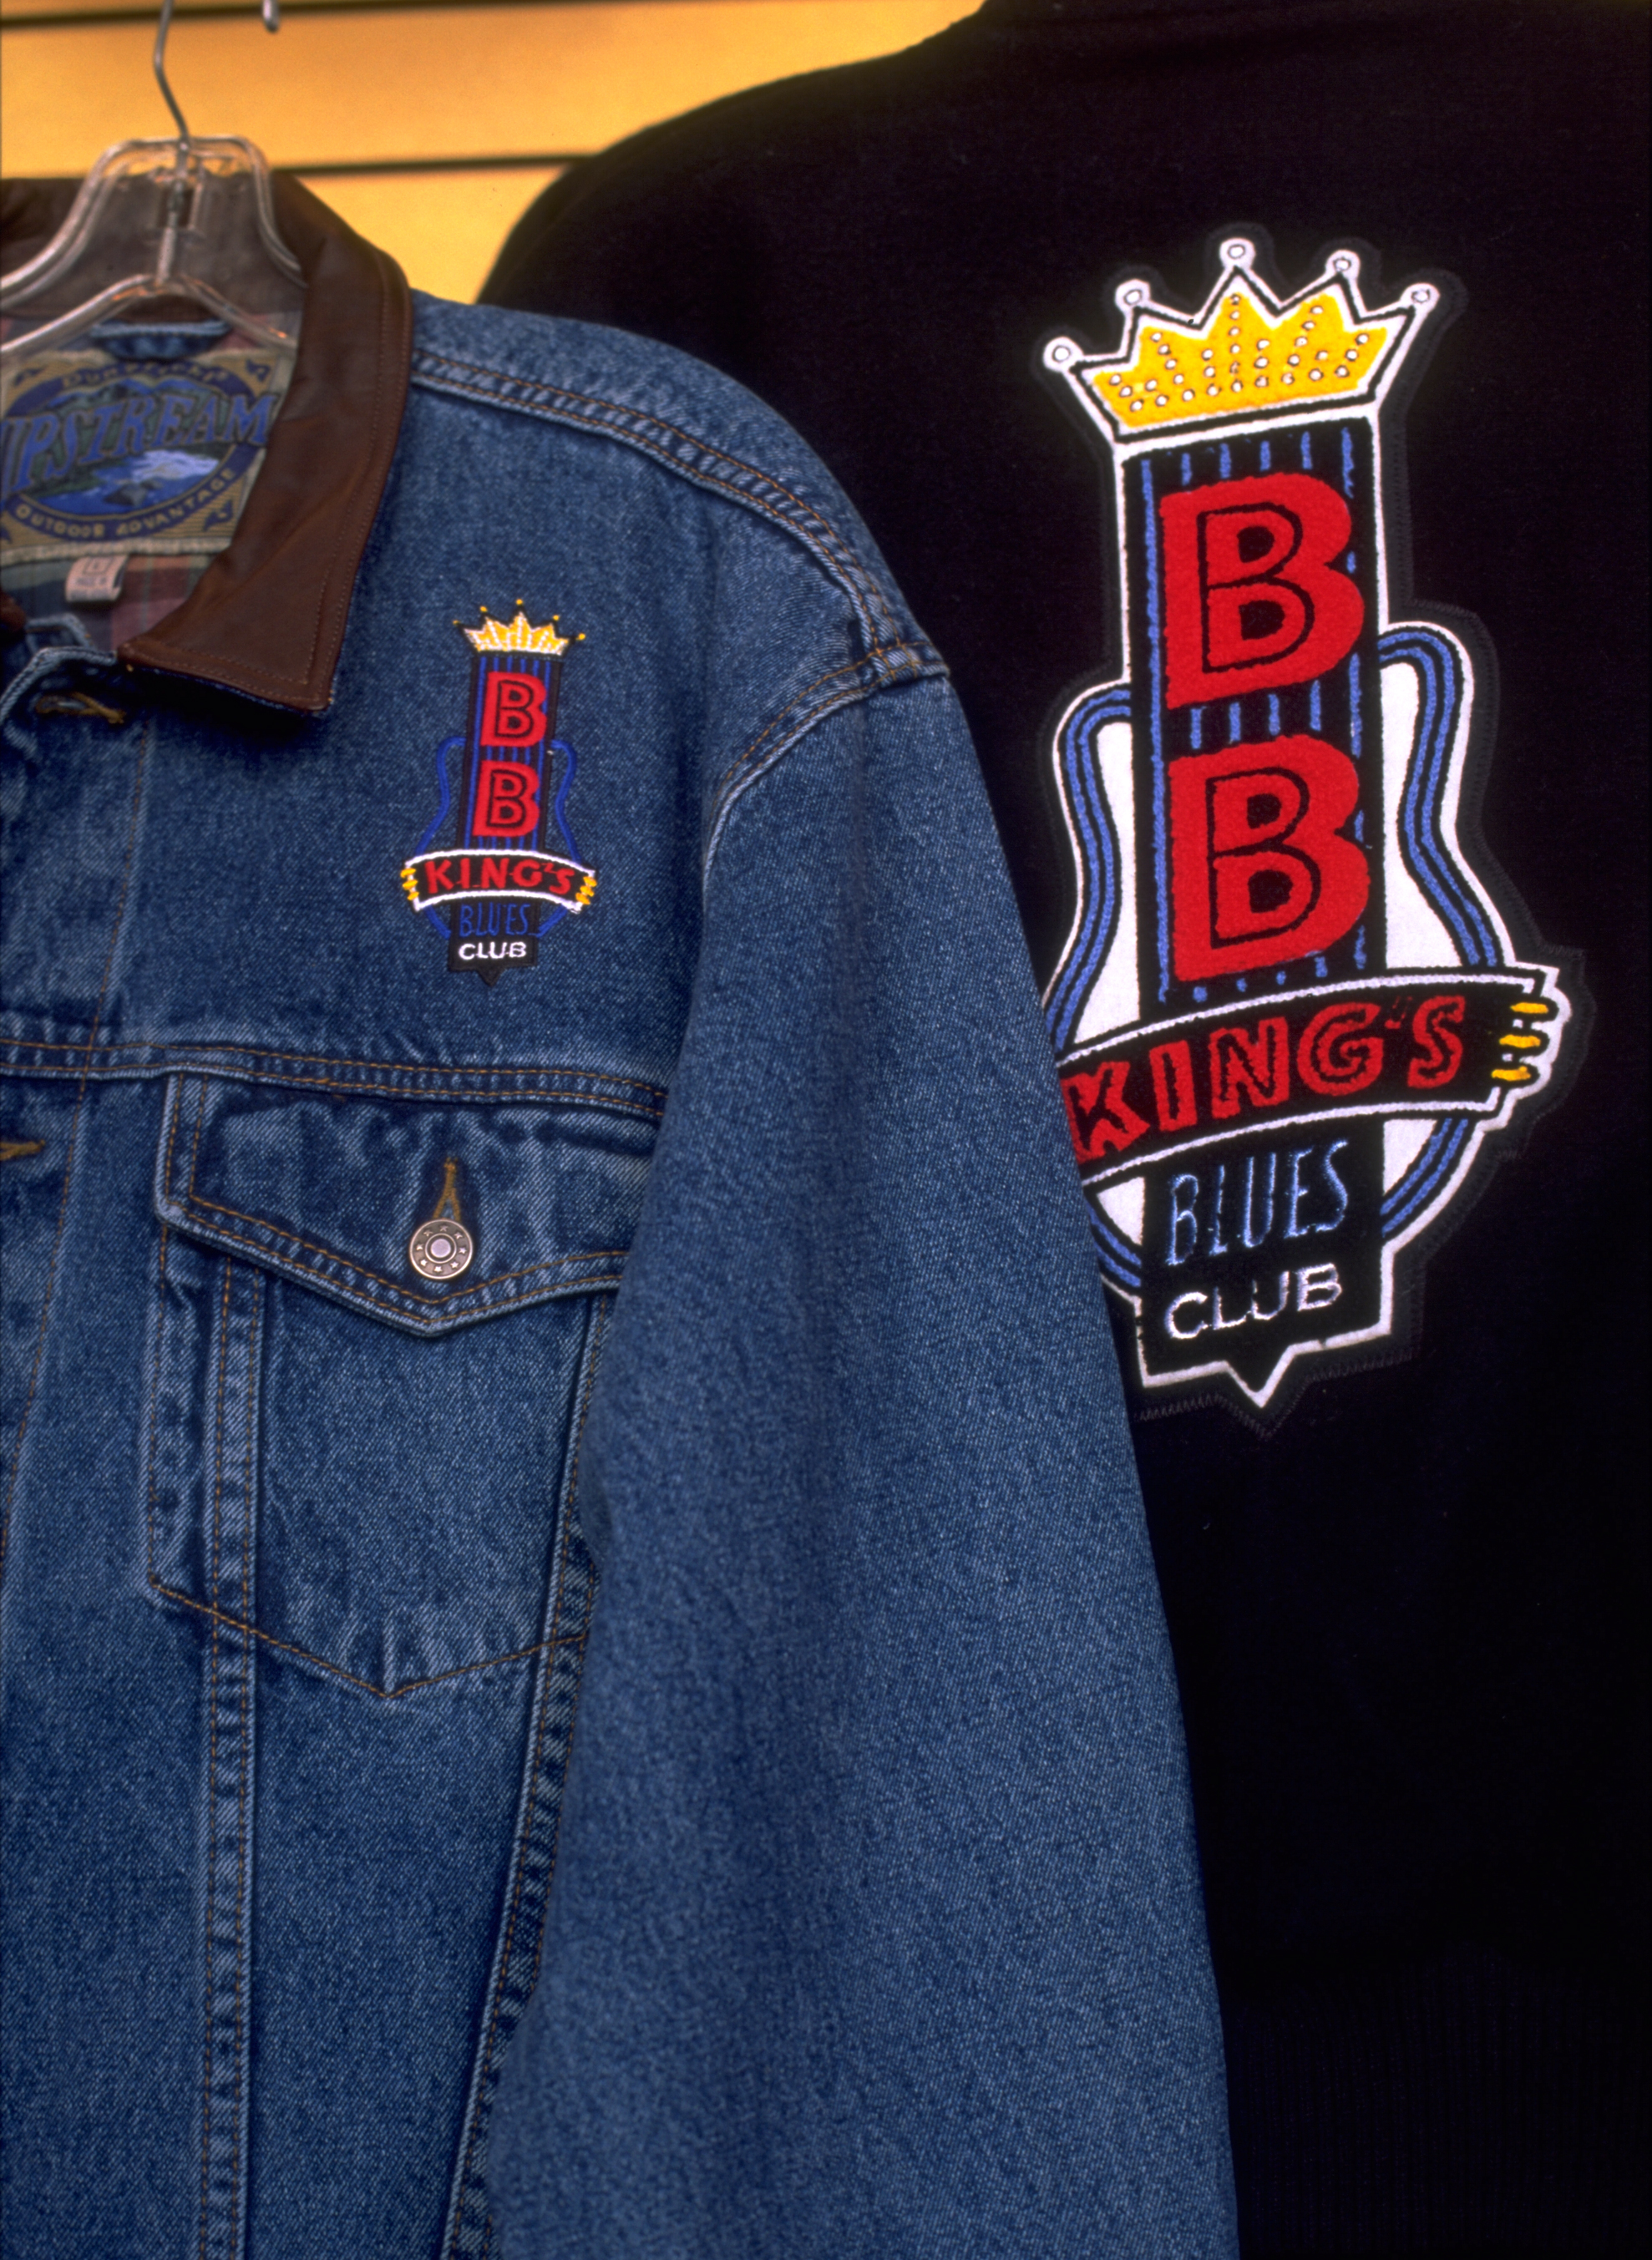  BB King’s Blues Club merchandise  Branding creative and design by Chuck Mitchell  Beale Street Memphis, TN 